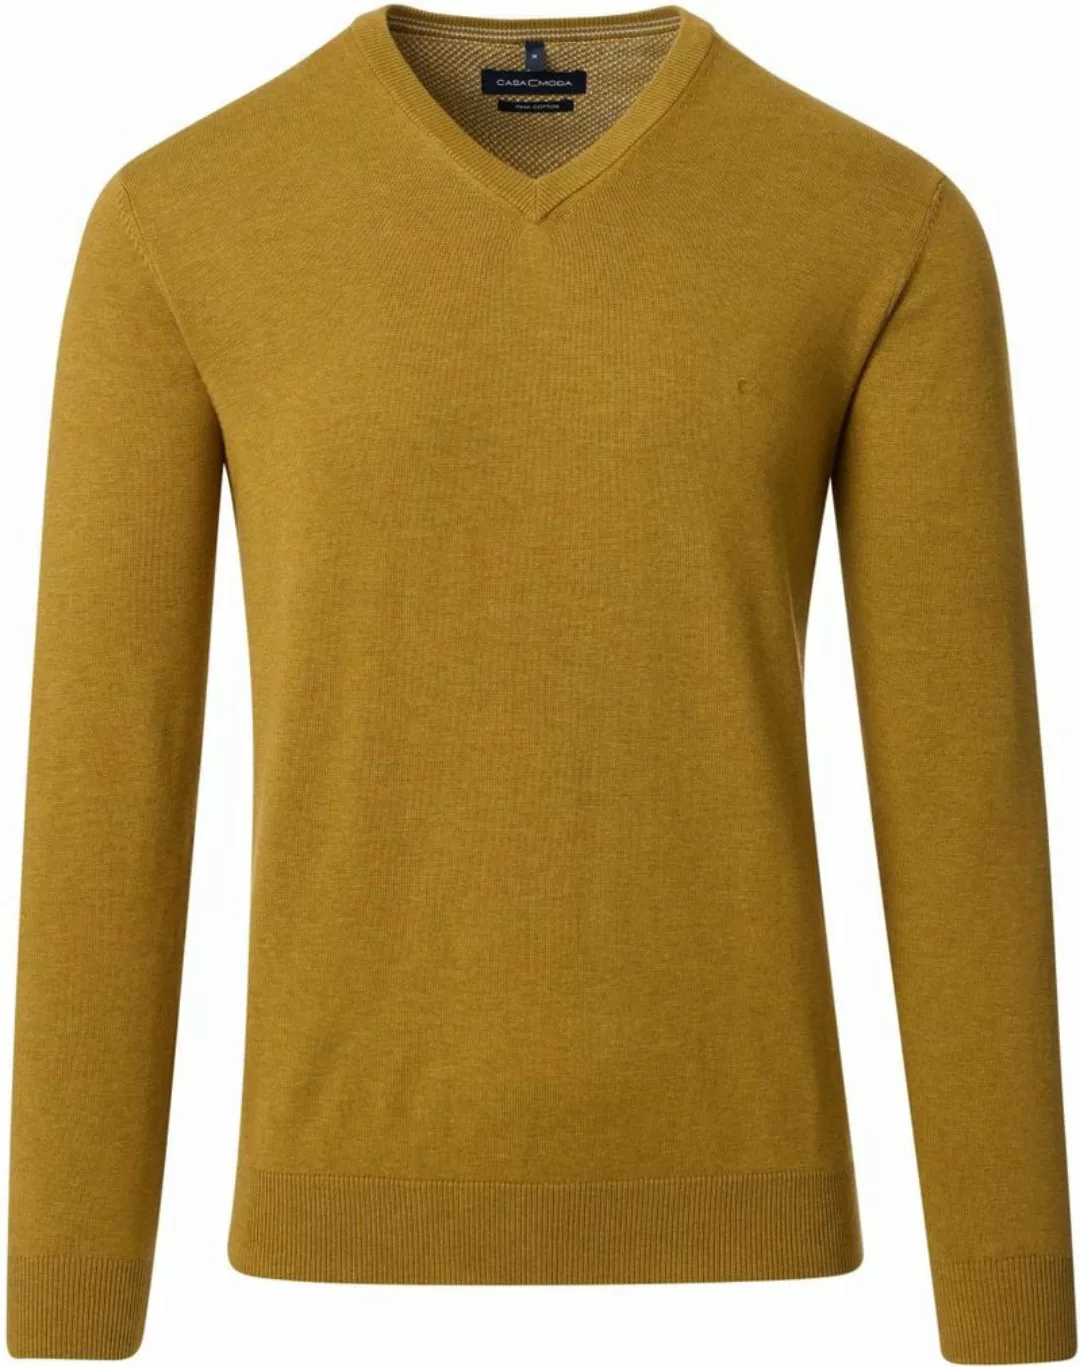 CASAMODA Sweatshirt Pullover V-Neck NOS, 543 gelb günstig online kaufen